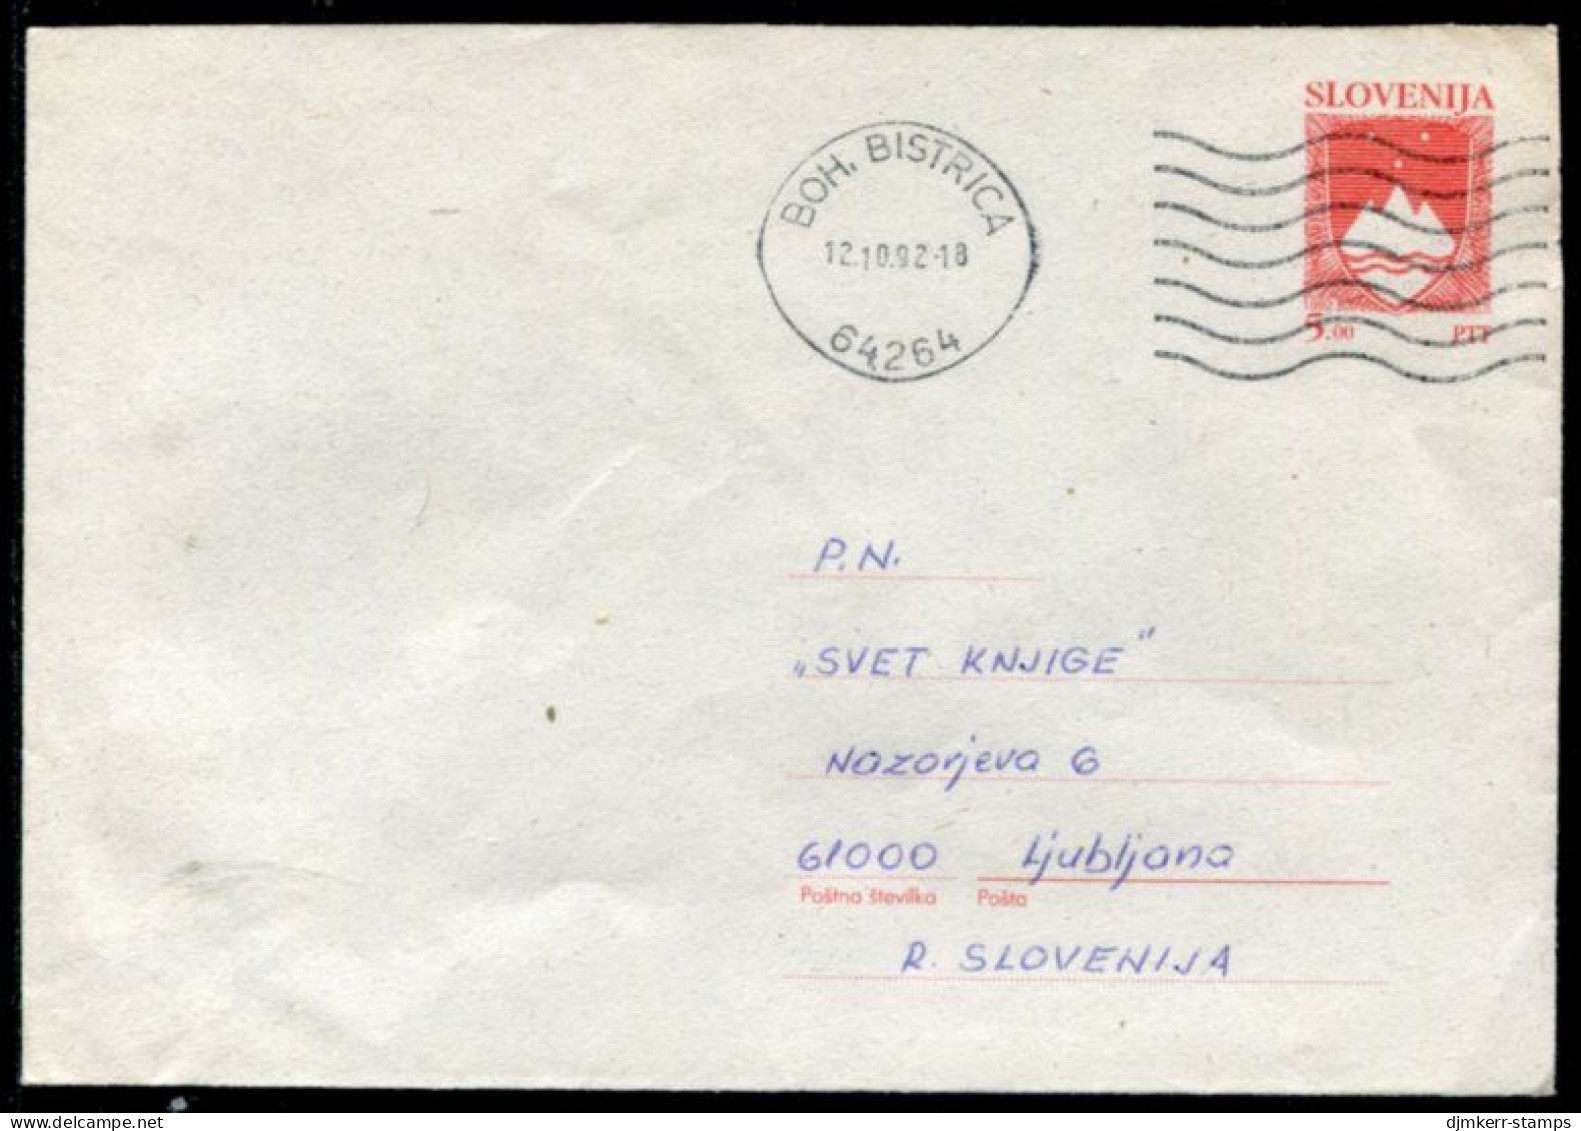 SLOVENIA 1992 5.00 T.  Postal Stationery Envelope On Grey Paper Used.  Michel U1b - Slovenia